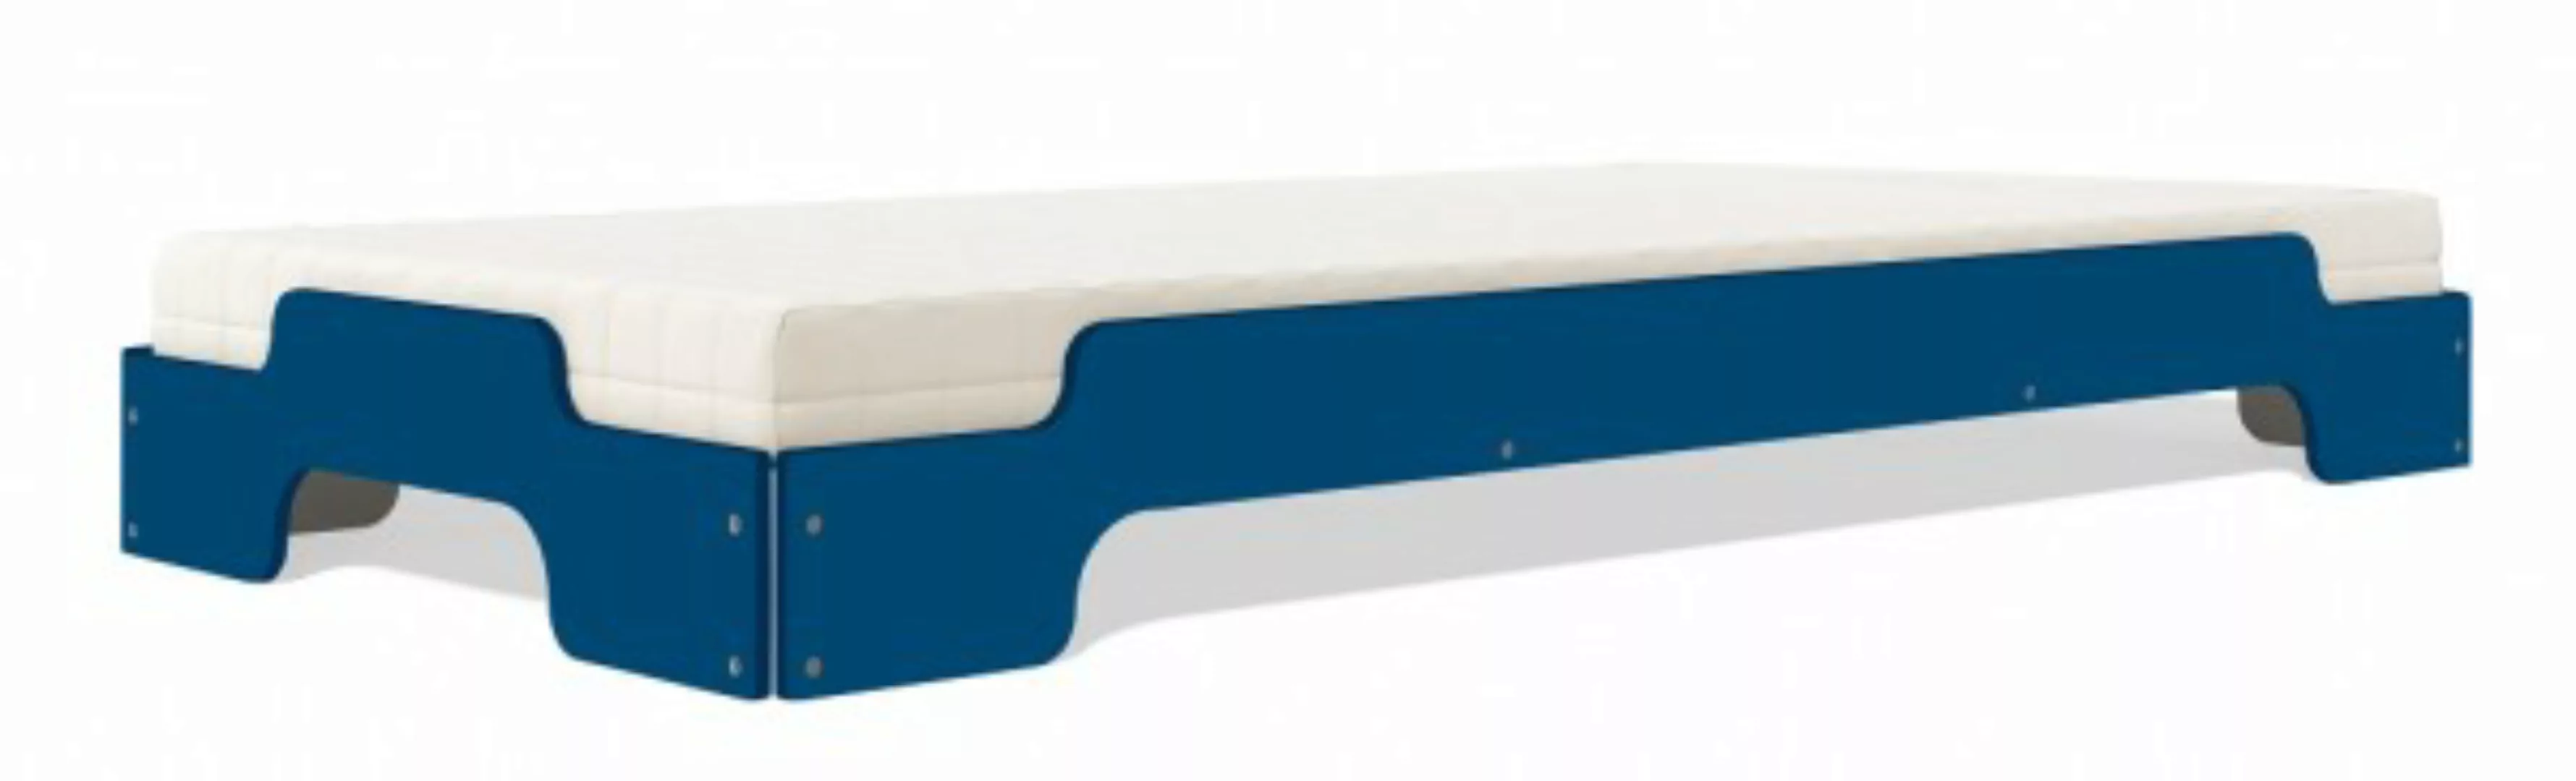 Stapelliege KLASSIK - Farbig kapitänsblau RAL 240 30 35 90 x 200 cm günstig online kaufen